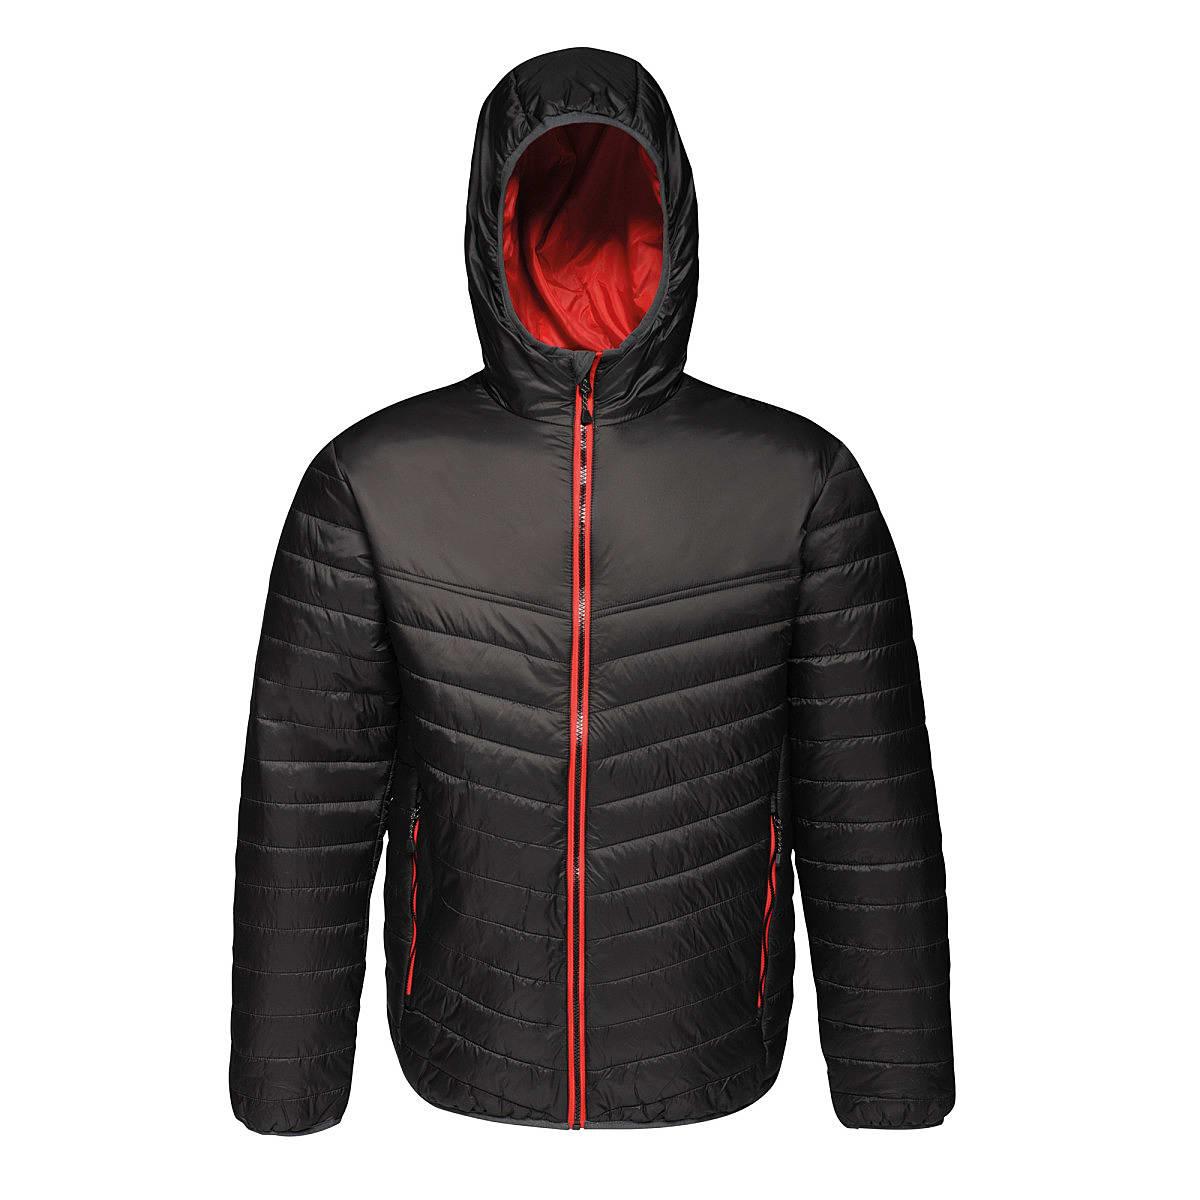 Regatta Mens Acadia II Jacket in Black / Classic Red (Product Code: TRA420)